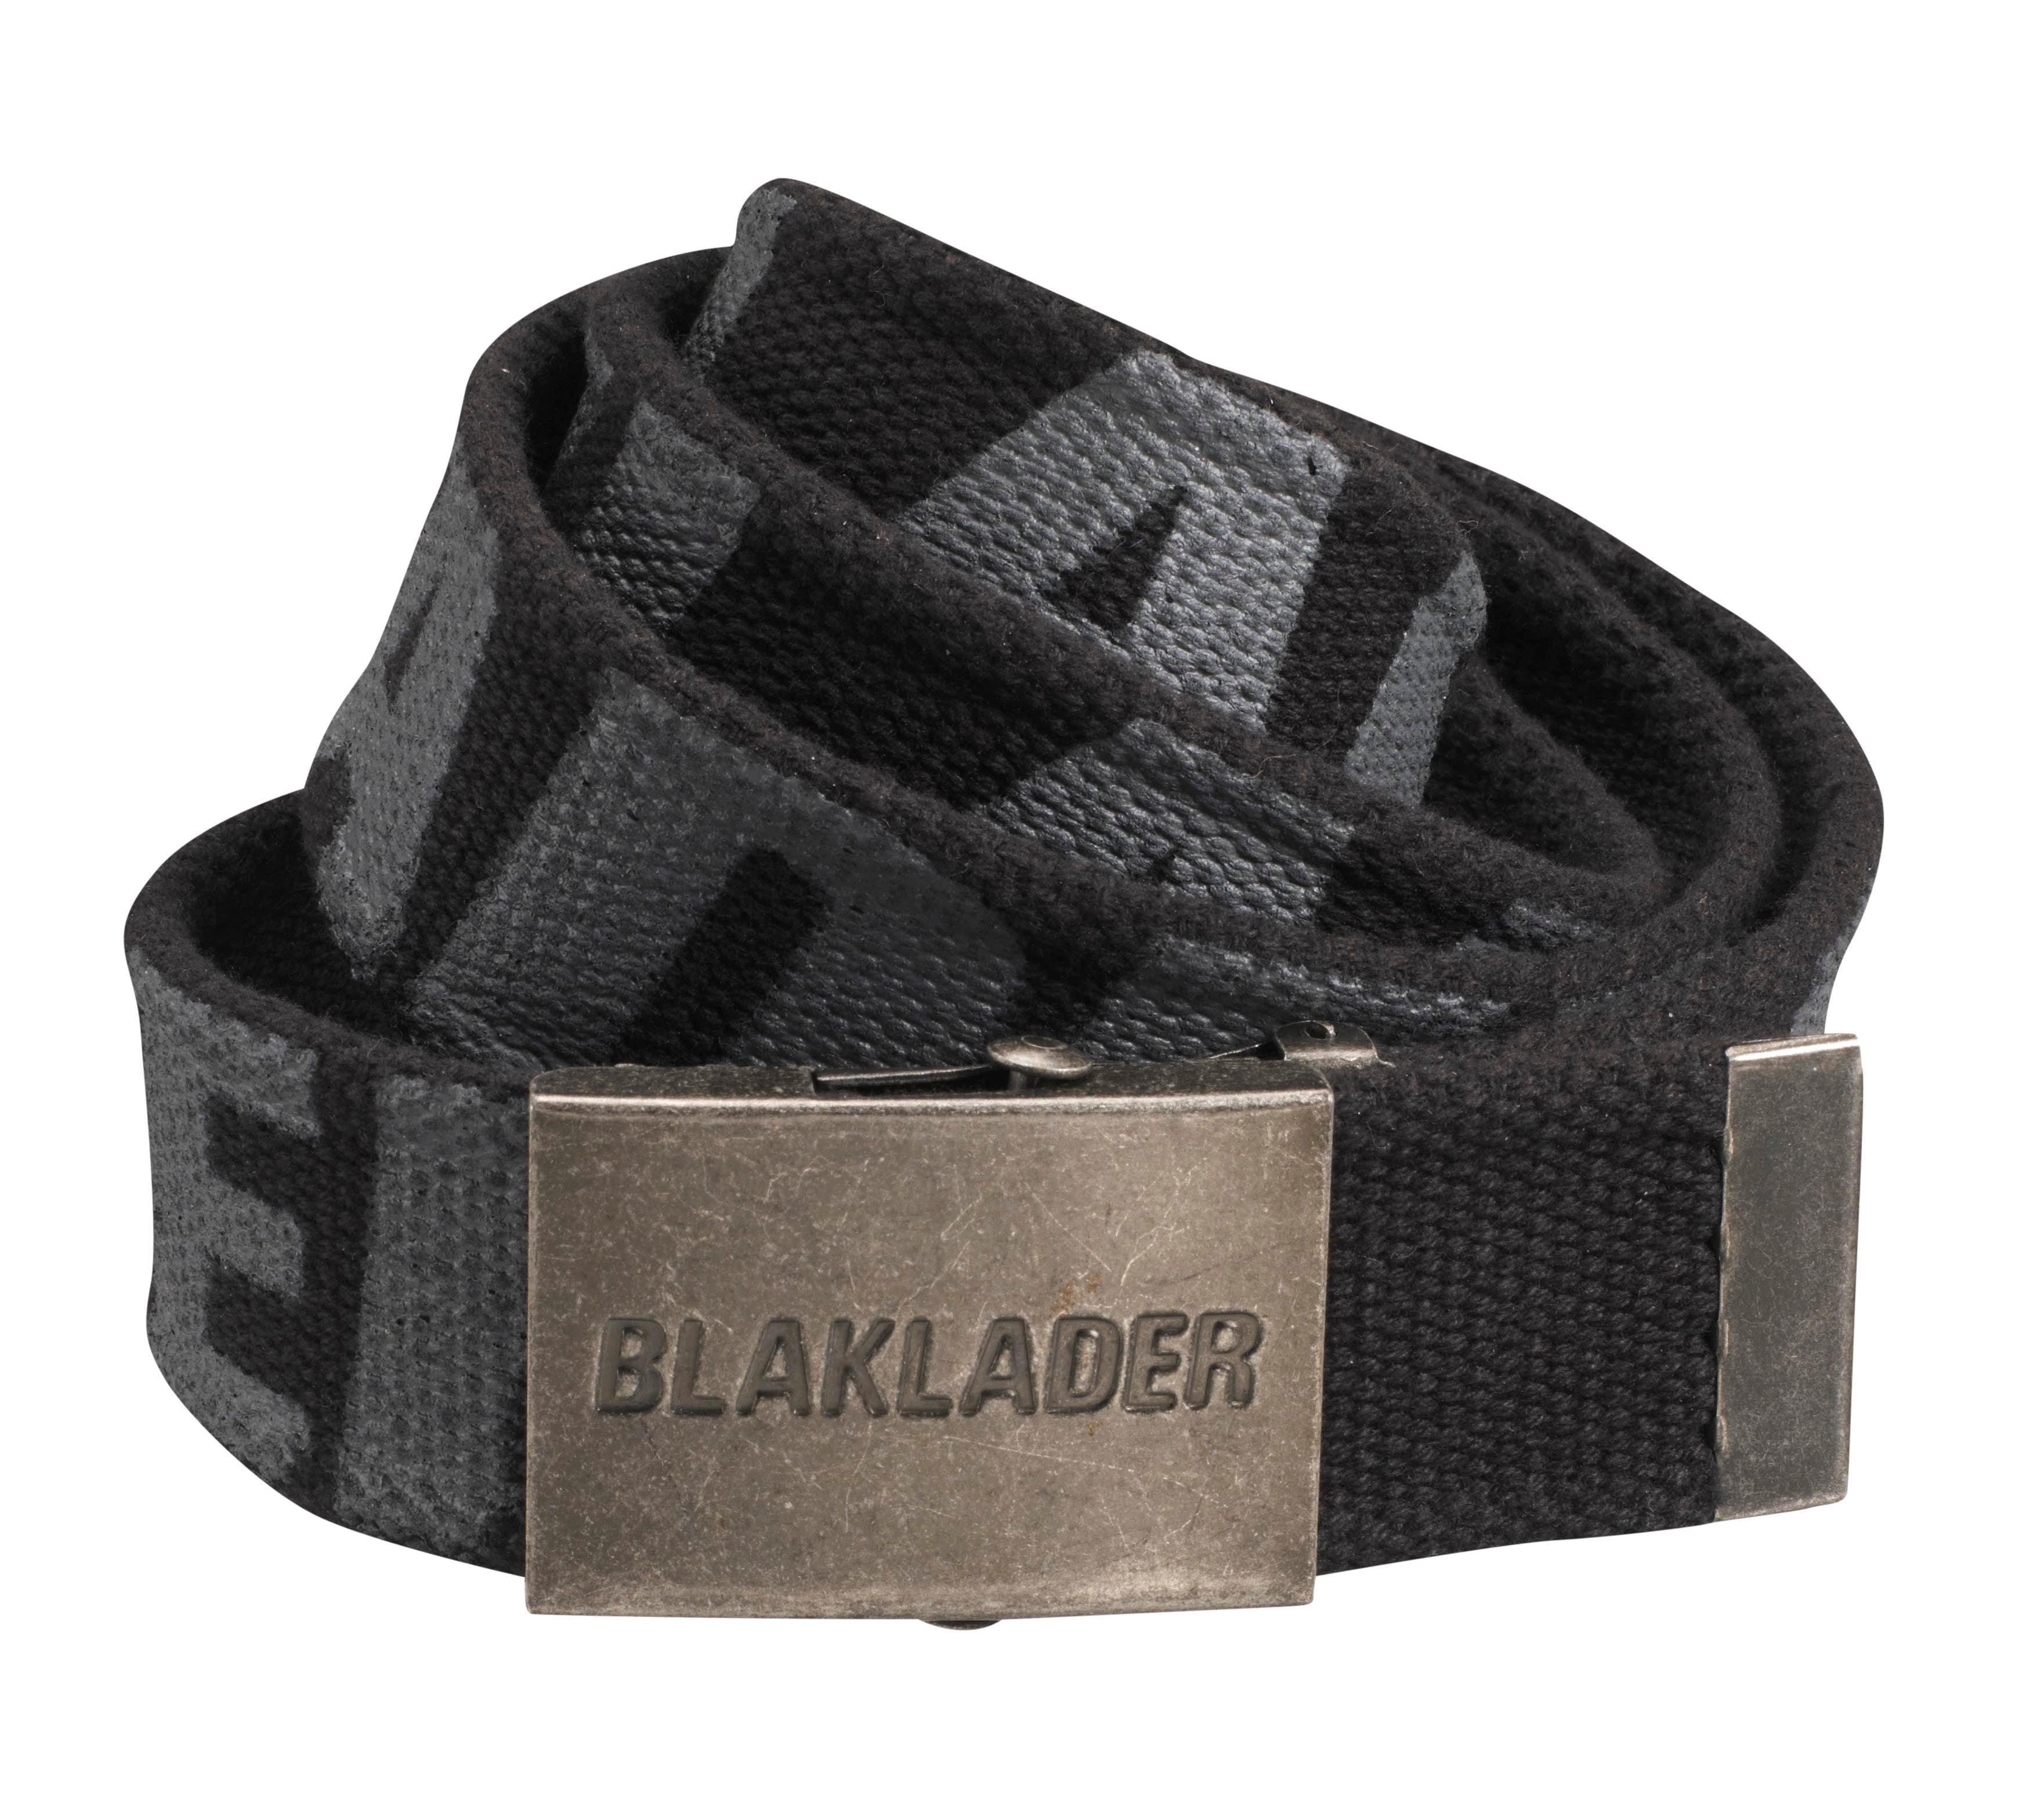 Blaklader 4033 Reversible Web Belt with Blaklader Print - Black/Grey Print - Trusted Gear Company LLC